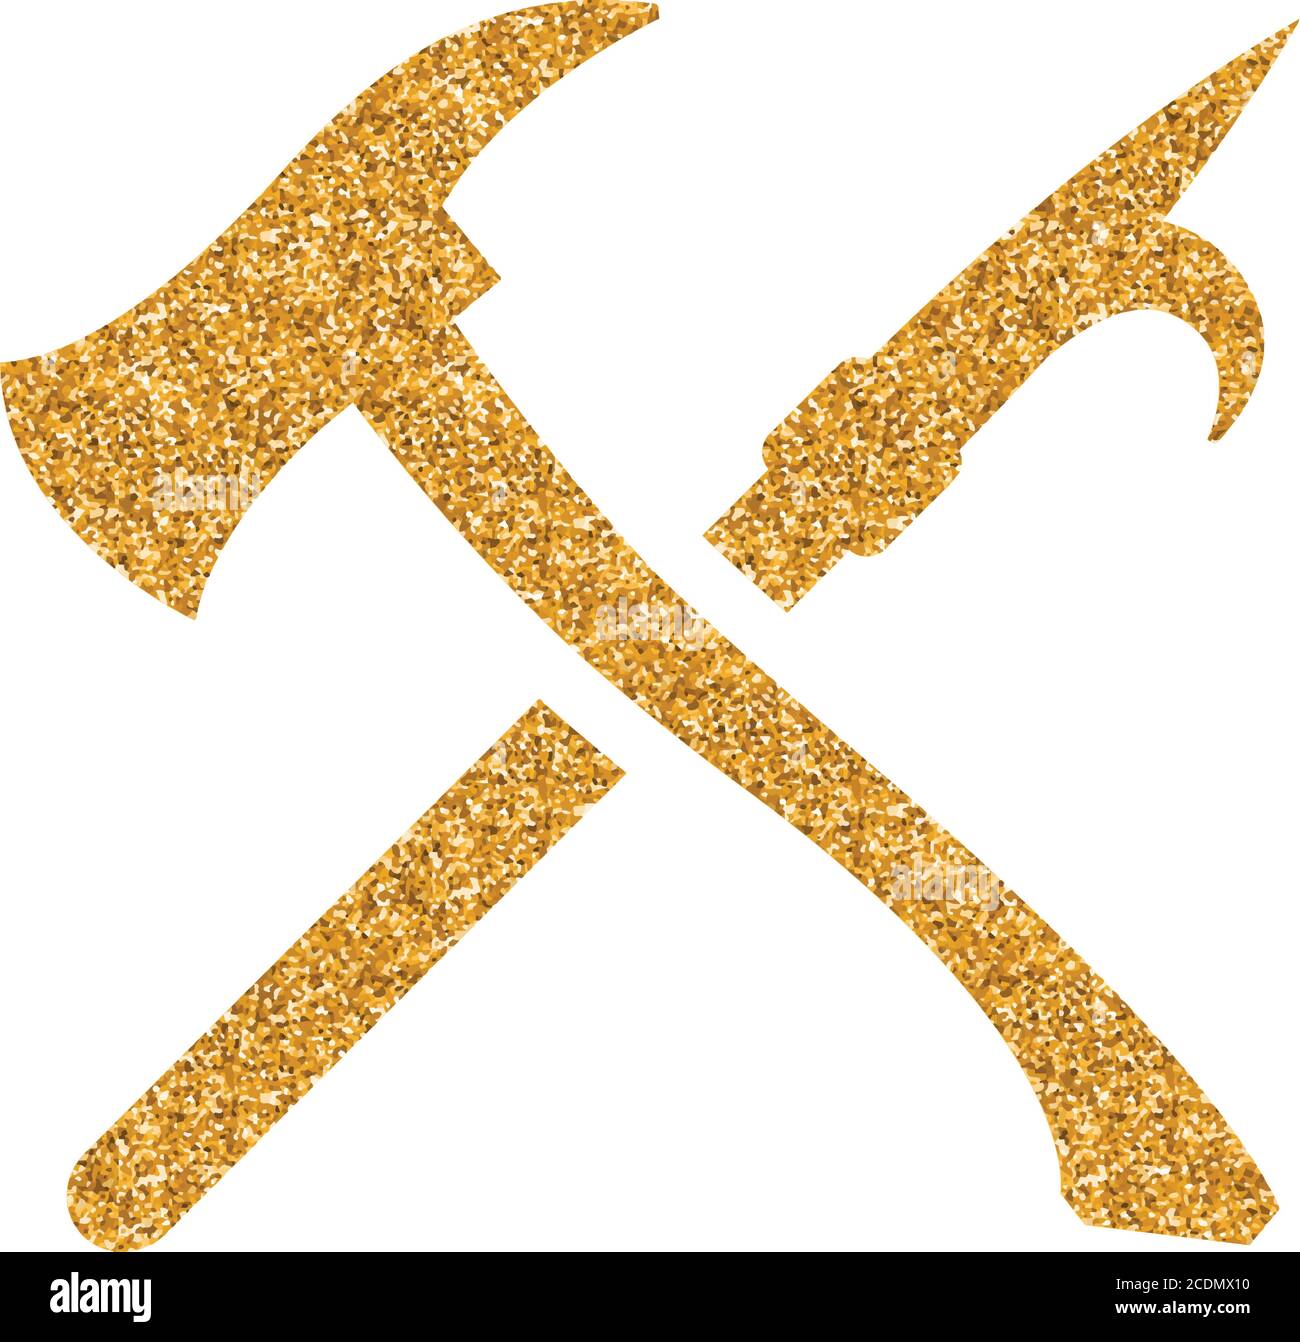 Fireman tools icon in gold glitter texture. Sparkle luxury style vector illustration. Stock Vector